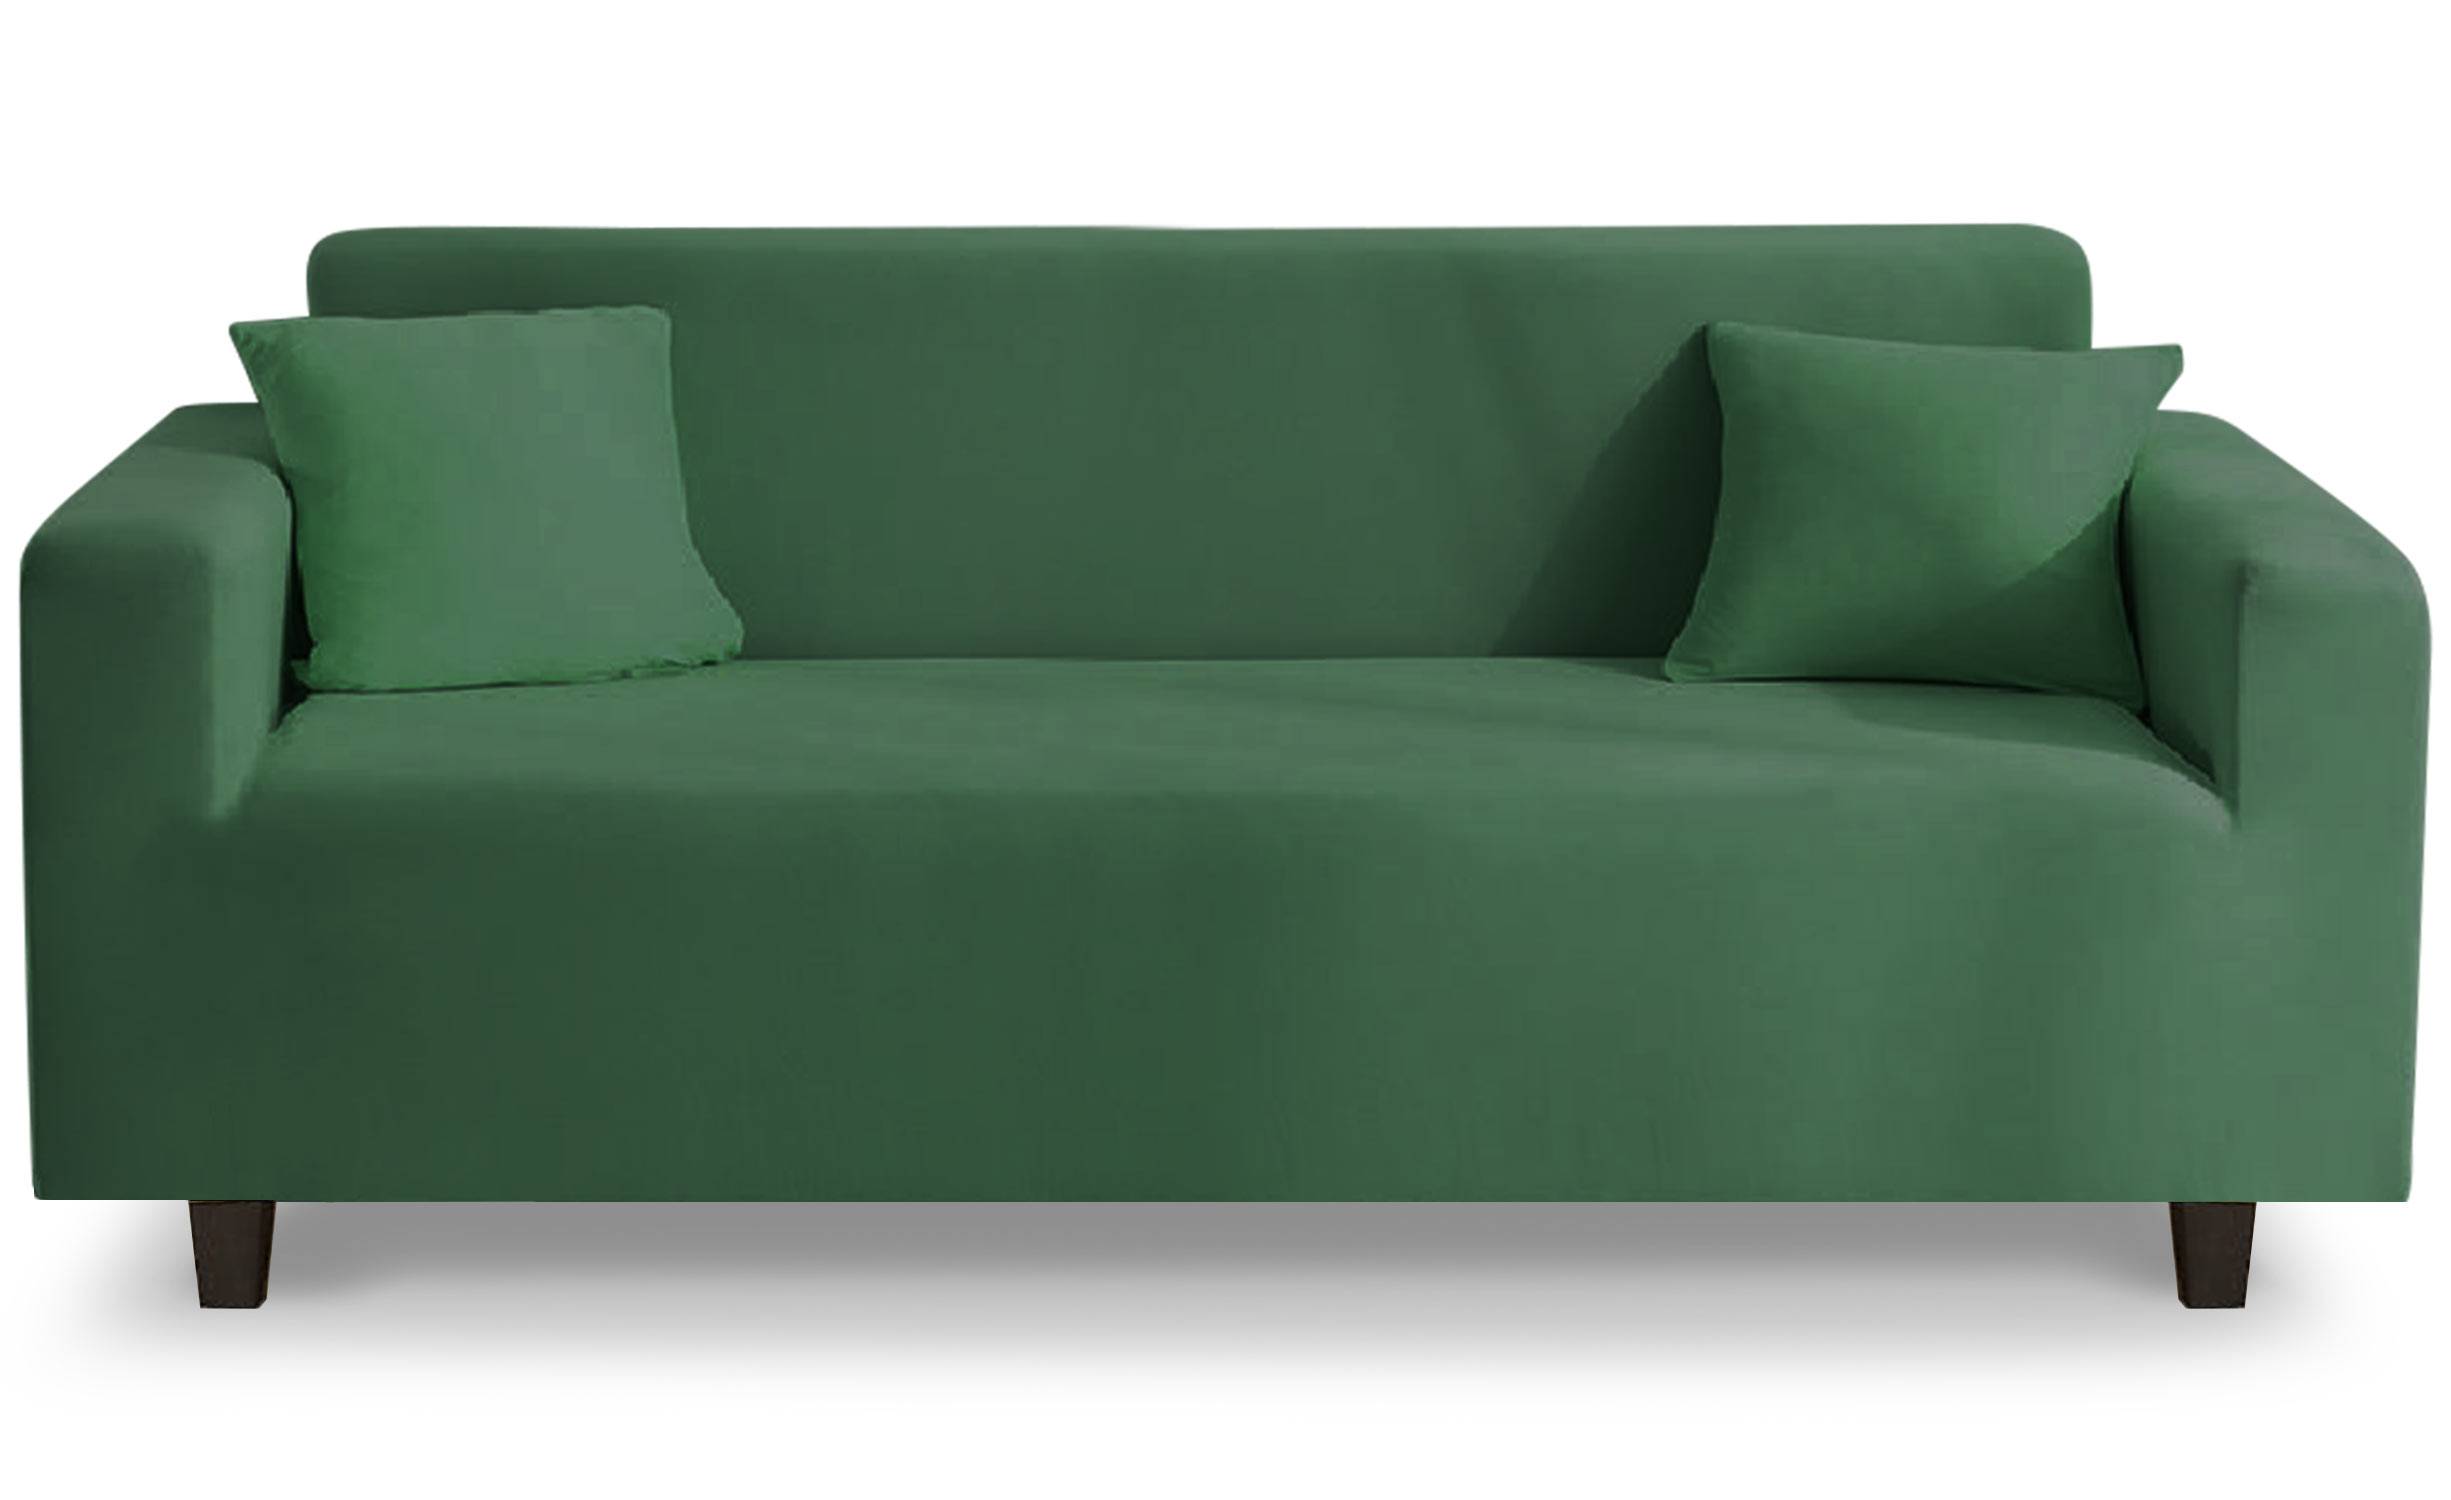 https://cdn.menzzo.com/media/catalog/product/h/o/u/housse-de-fauteuil-extensible-decoprotect-3-places-vert_0-633aa66e5647a.jpg?twic=v1/resize=700